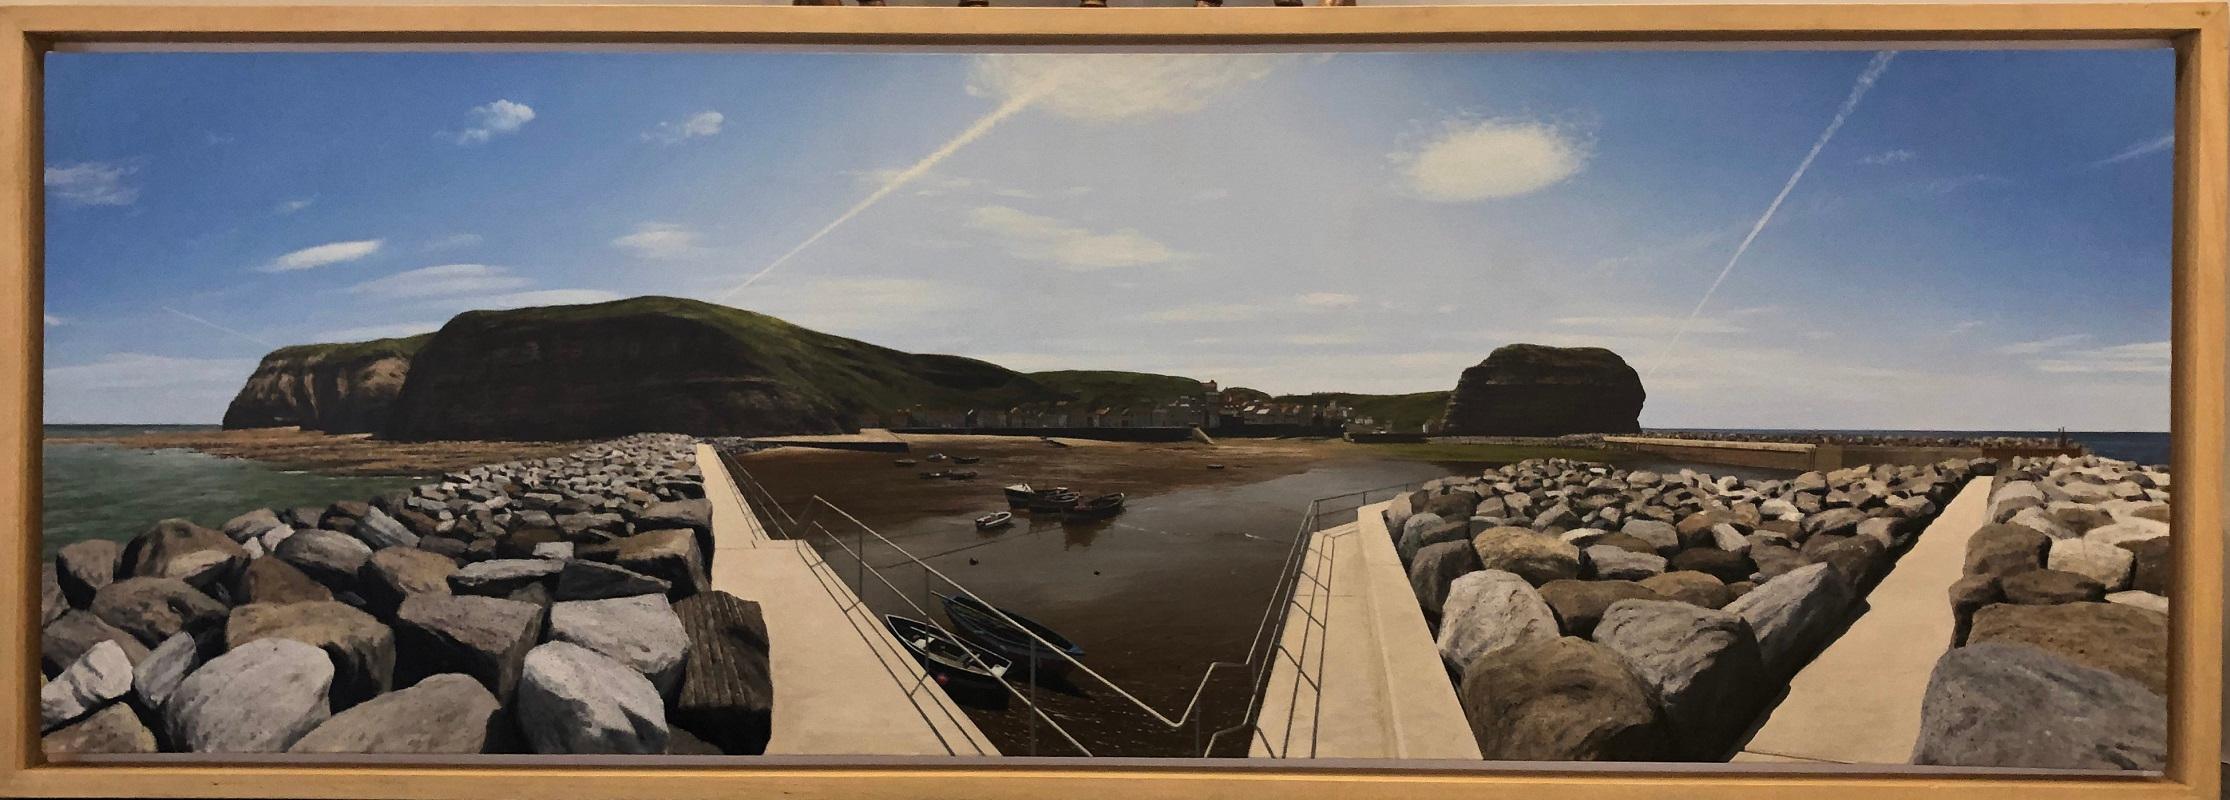 Steven Whitehead Landscape Painting - 'Staithes Harbour' British Realist landscape oil painting 